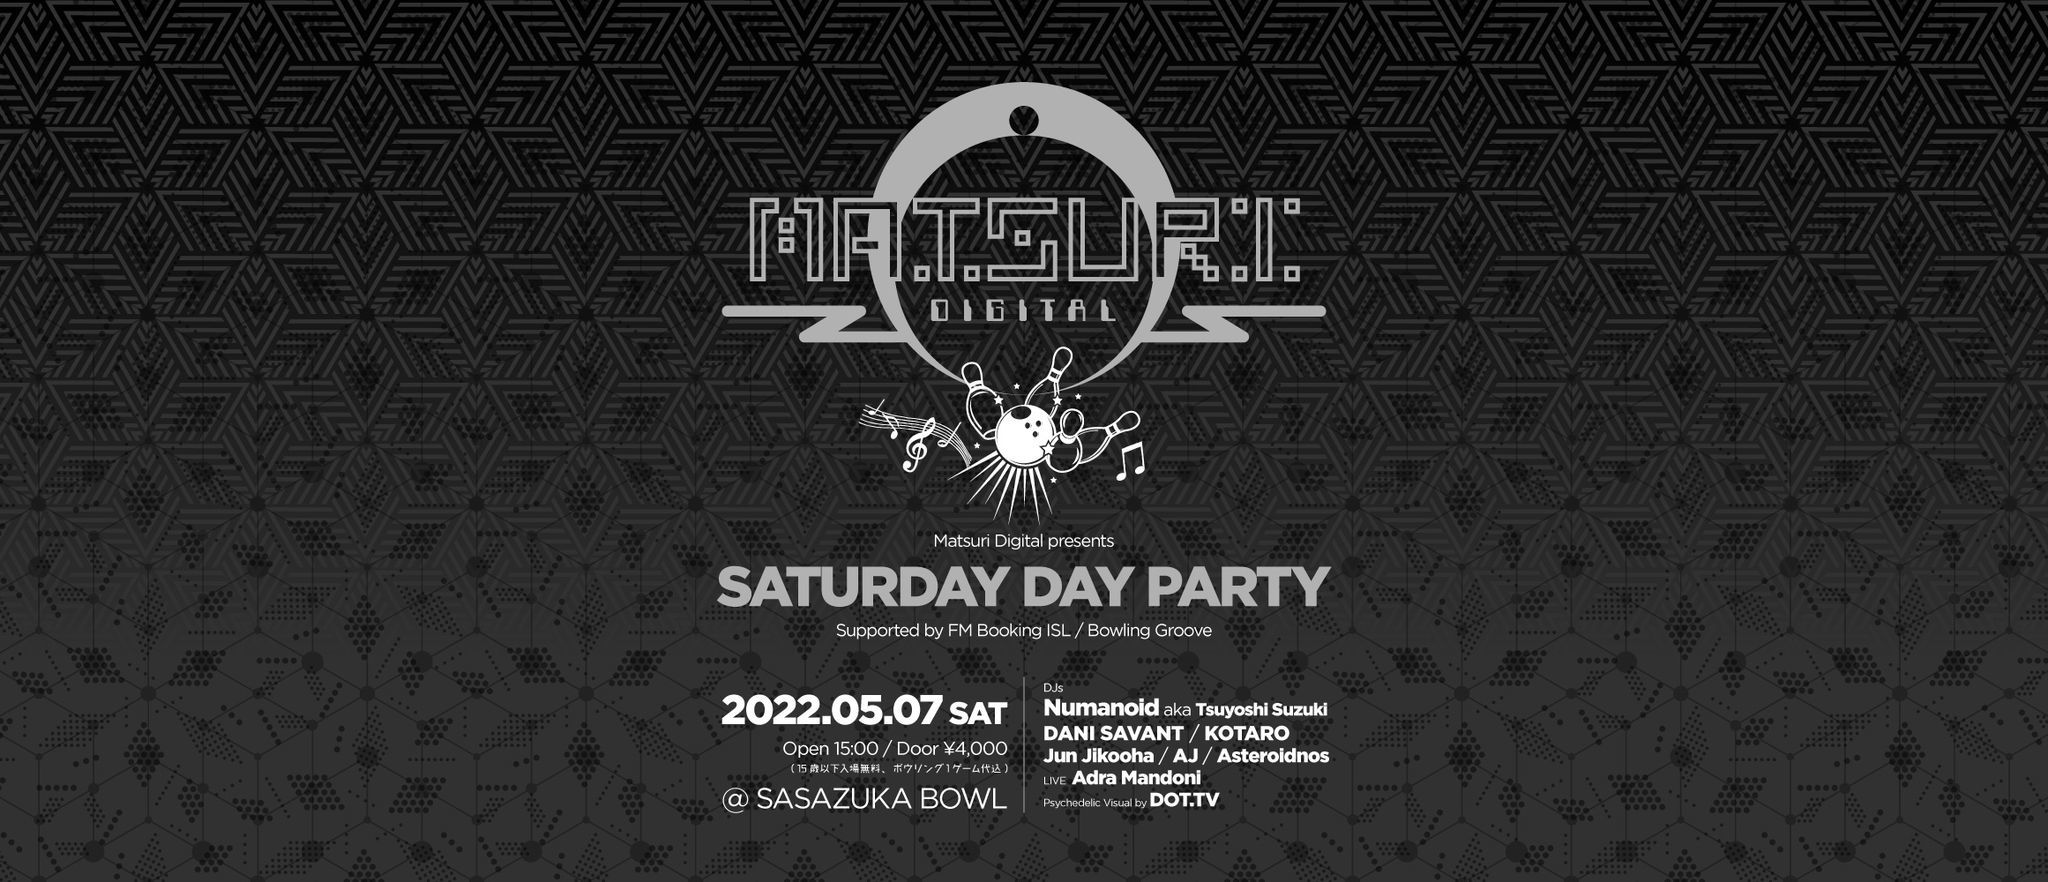 5/7 Matsuri Digital prst. Saturday Day Party@笹塚ボウル_c0311698_21511238.jpg